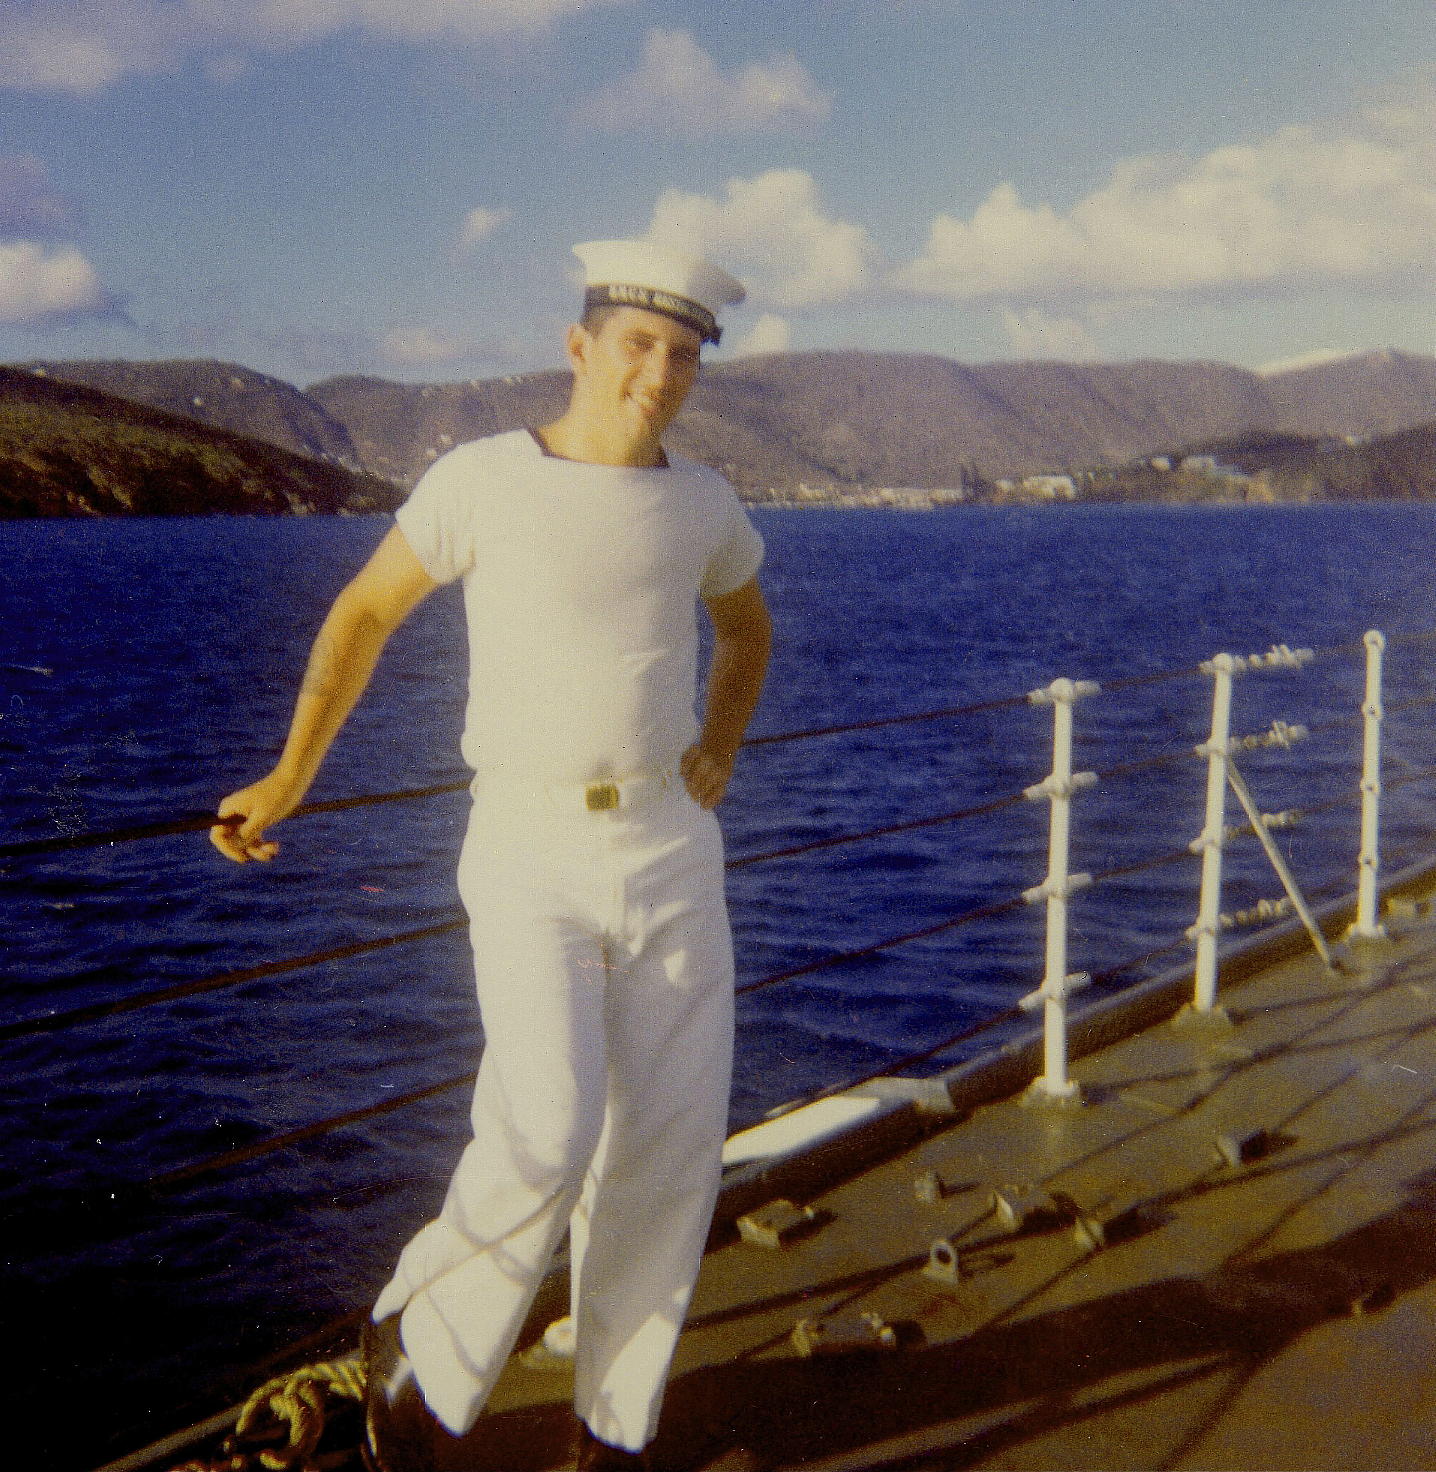 Gordon Hunter on HMCS Restigouche in Charlotte Amalie, Virgin Islands.